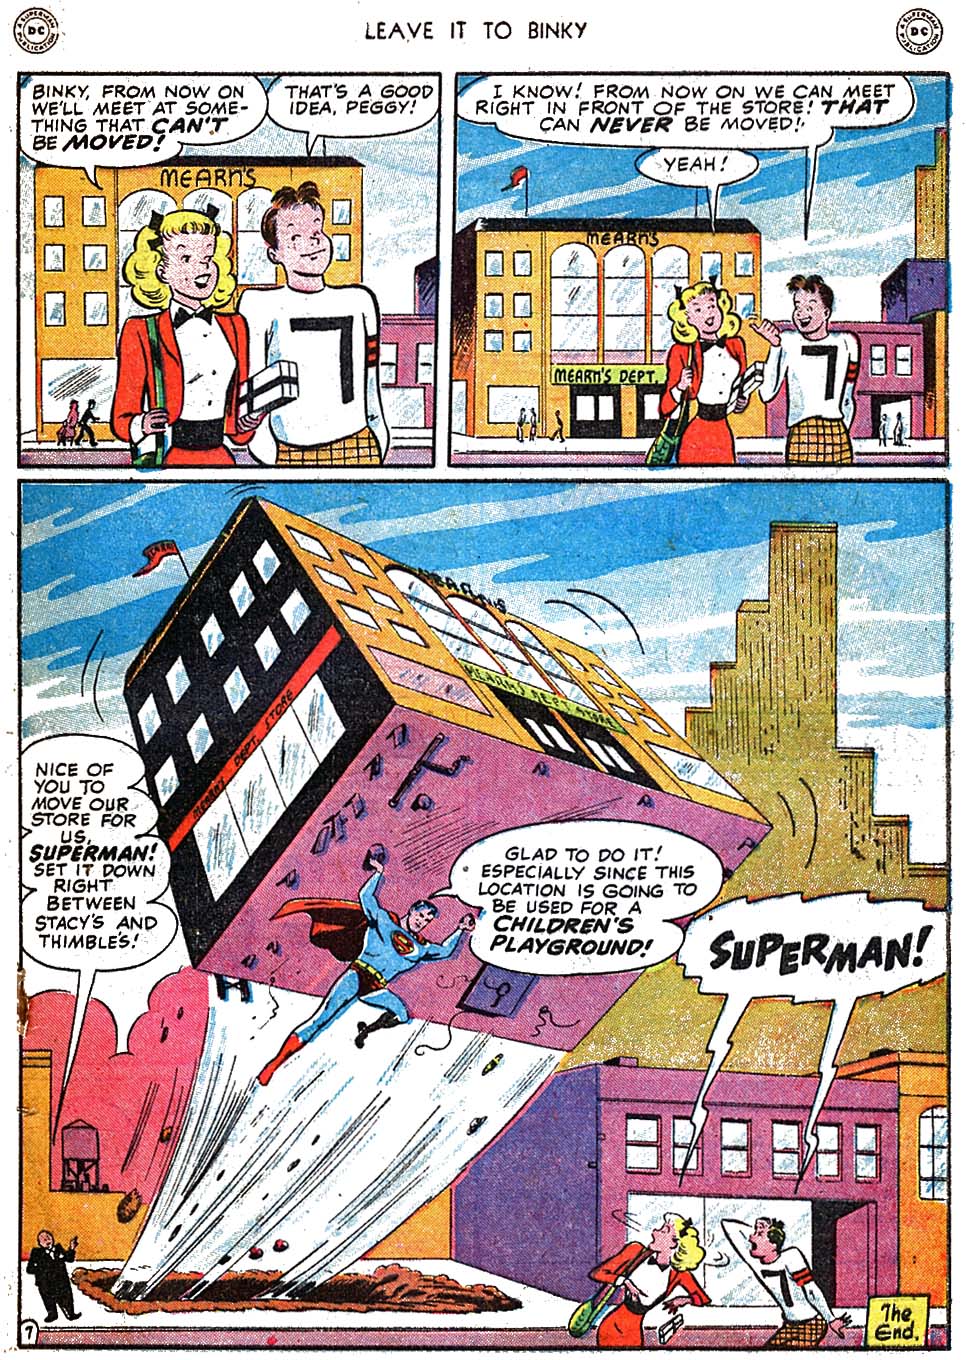 Read online Leave it to Binky comic -  Issue #5 - 49